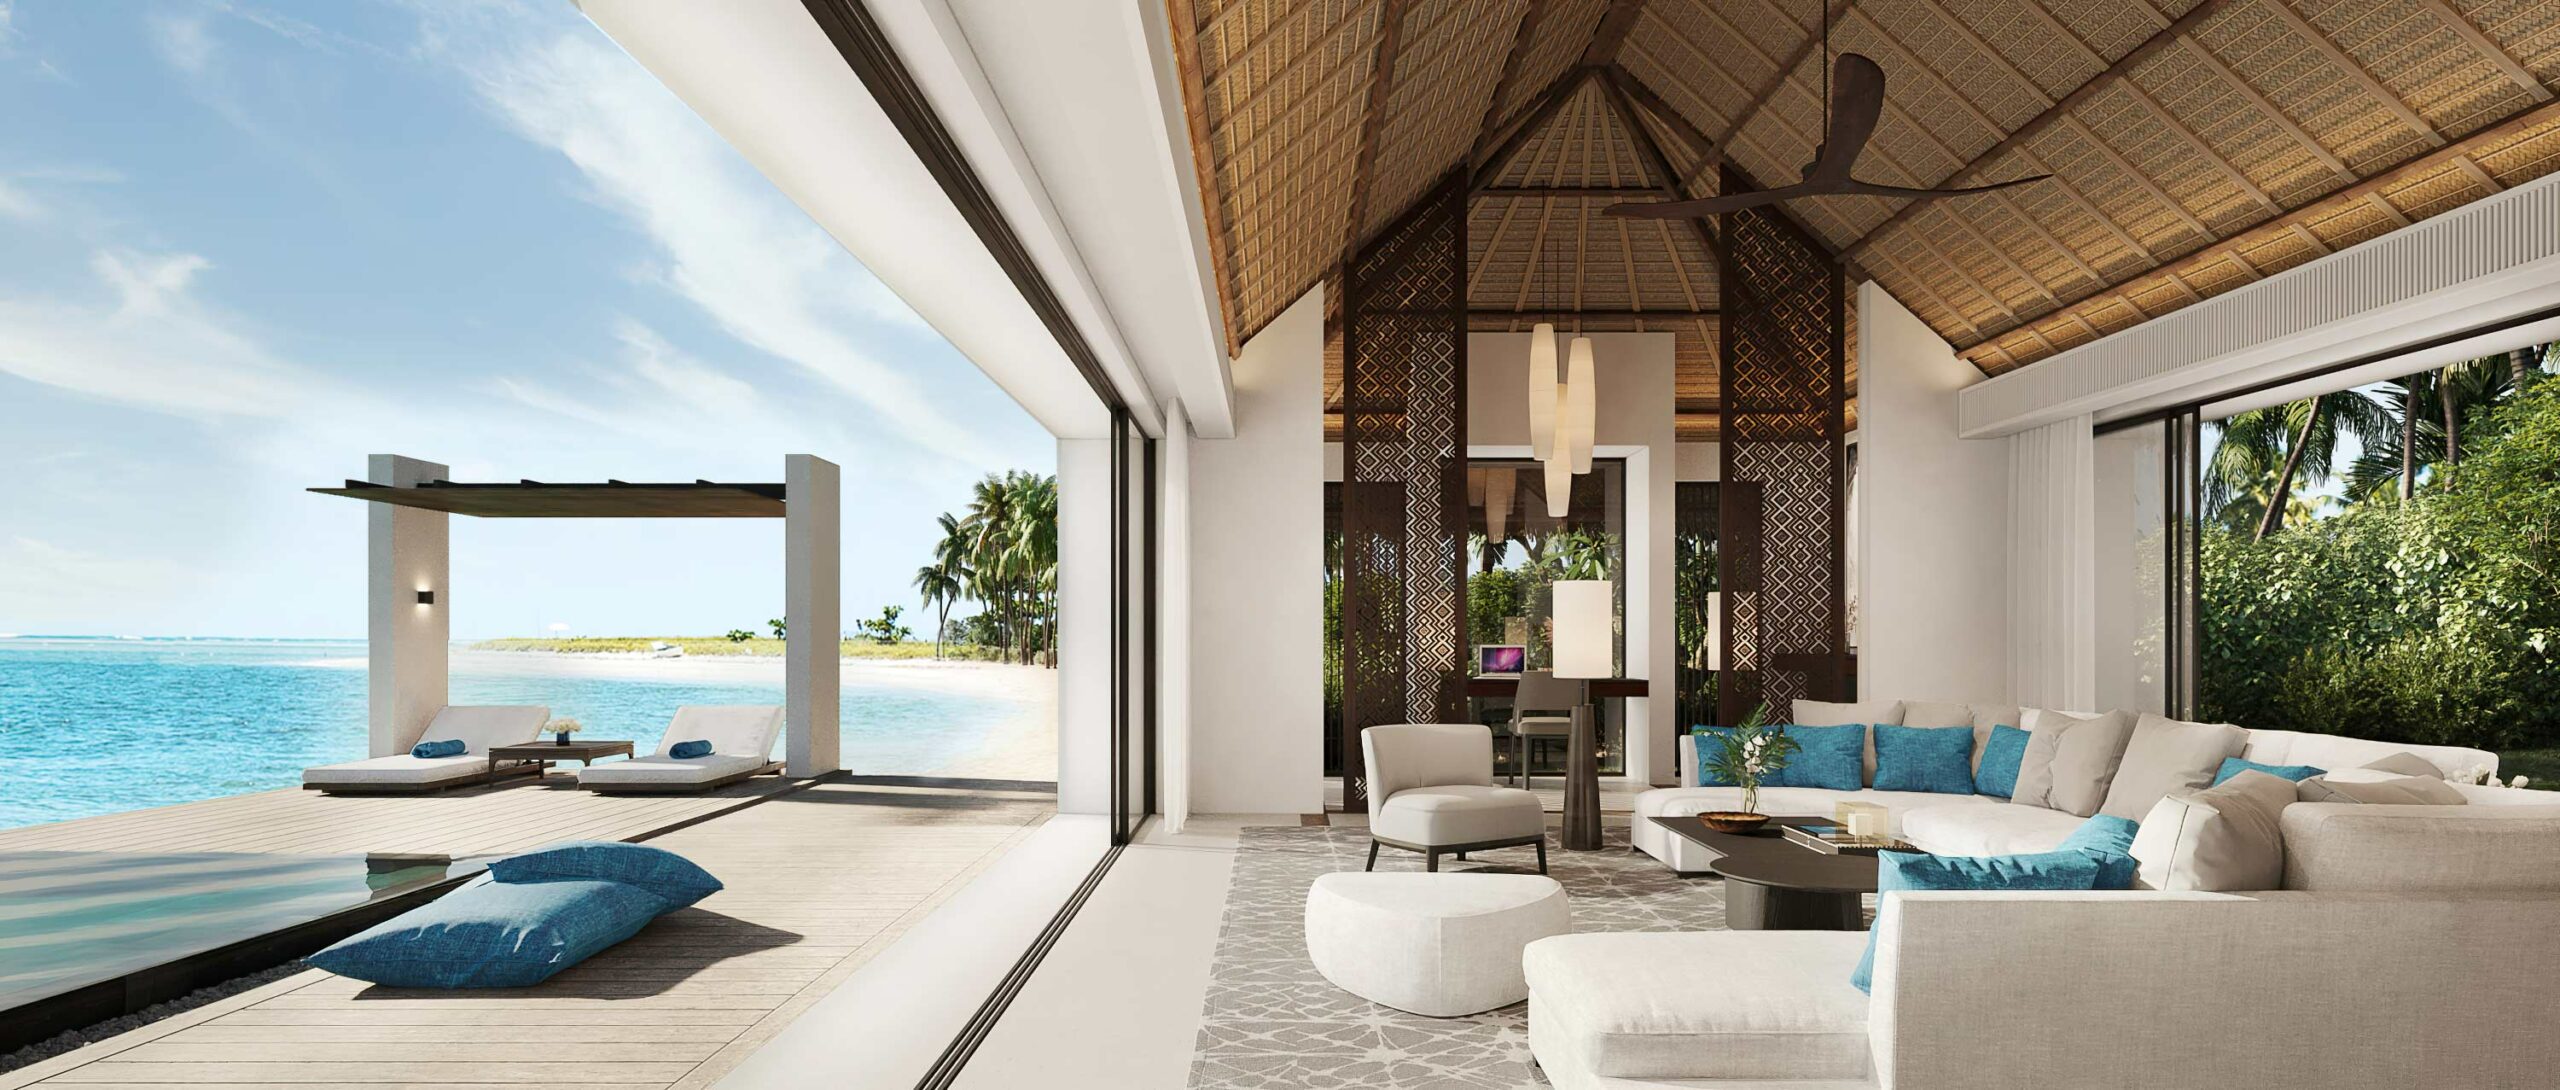 Luxury Resort Maldives (3)